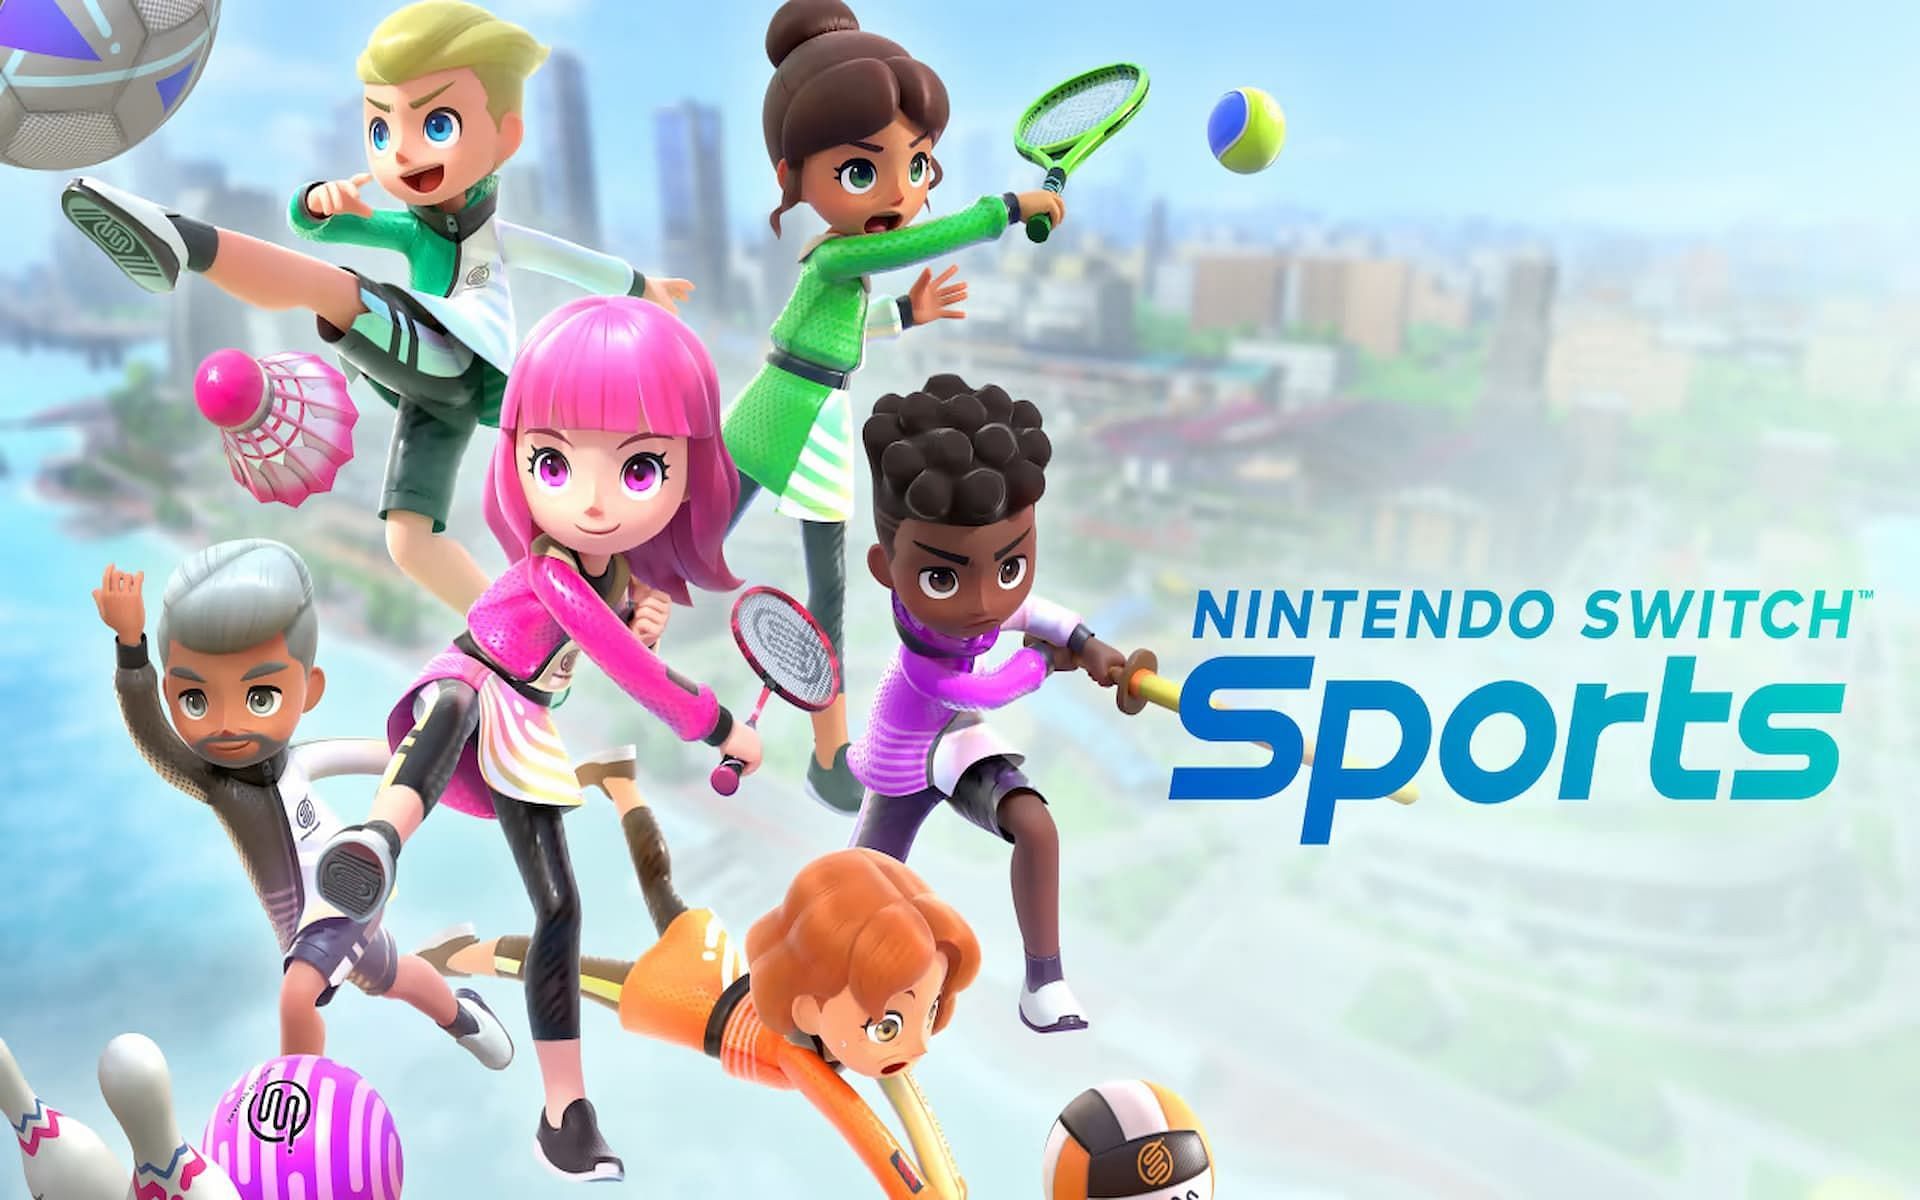 Nintendo switch sport. Нинтендо свитч спорт. Nintendo Switch игры. Нинтендо свитч Спортс. Игра для Нинтендо свитч спорт.